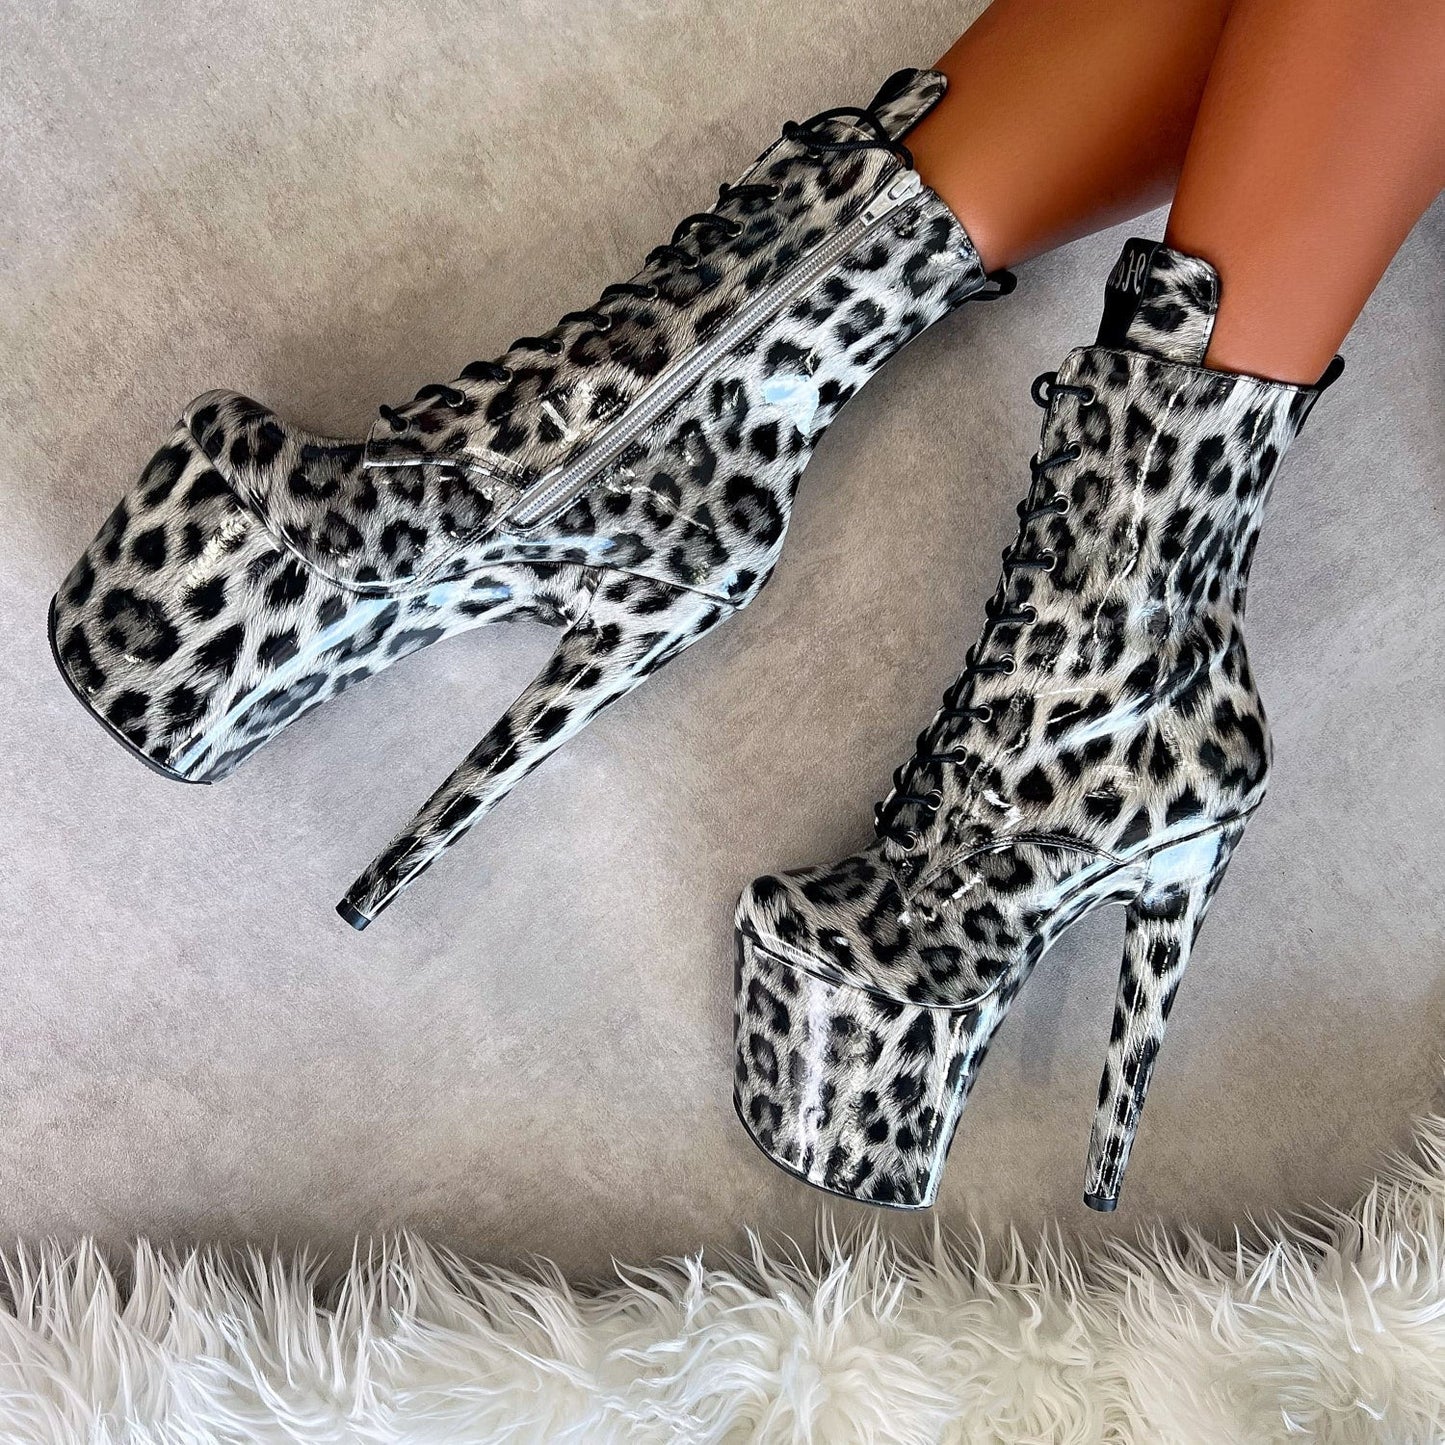 Snow Leopard Boot - 8 INCH, stripper shoe, stripper heel, pole heel, not a pleaser, platform, dancer, pole dance, floor work